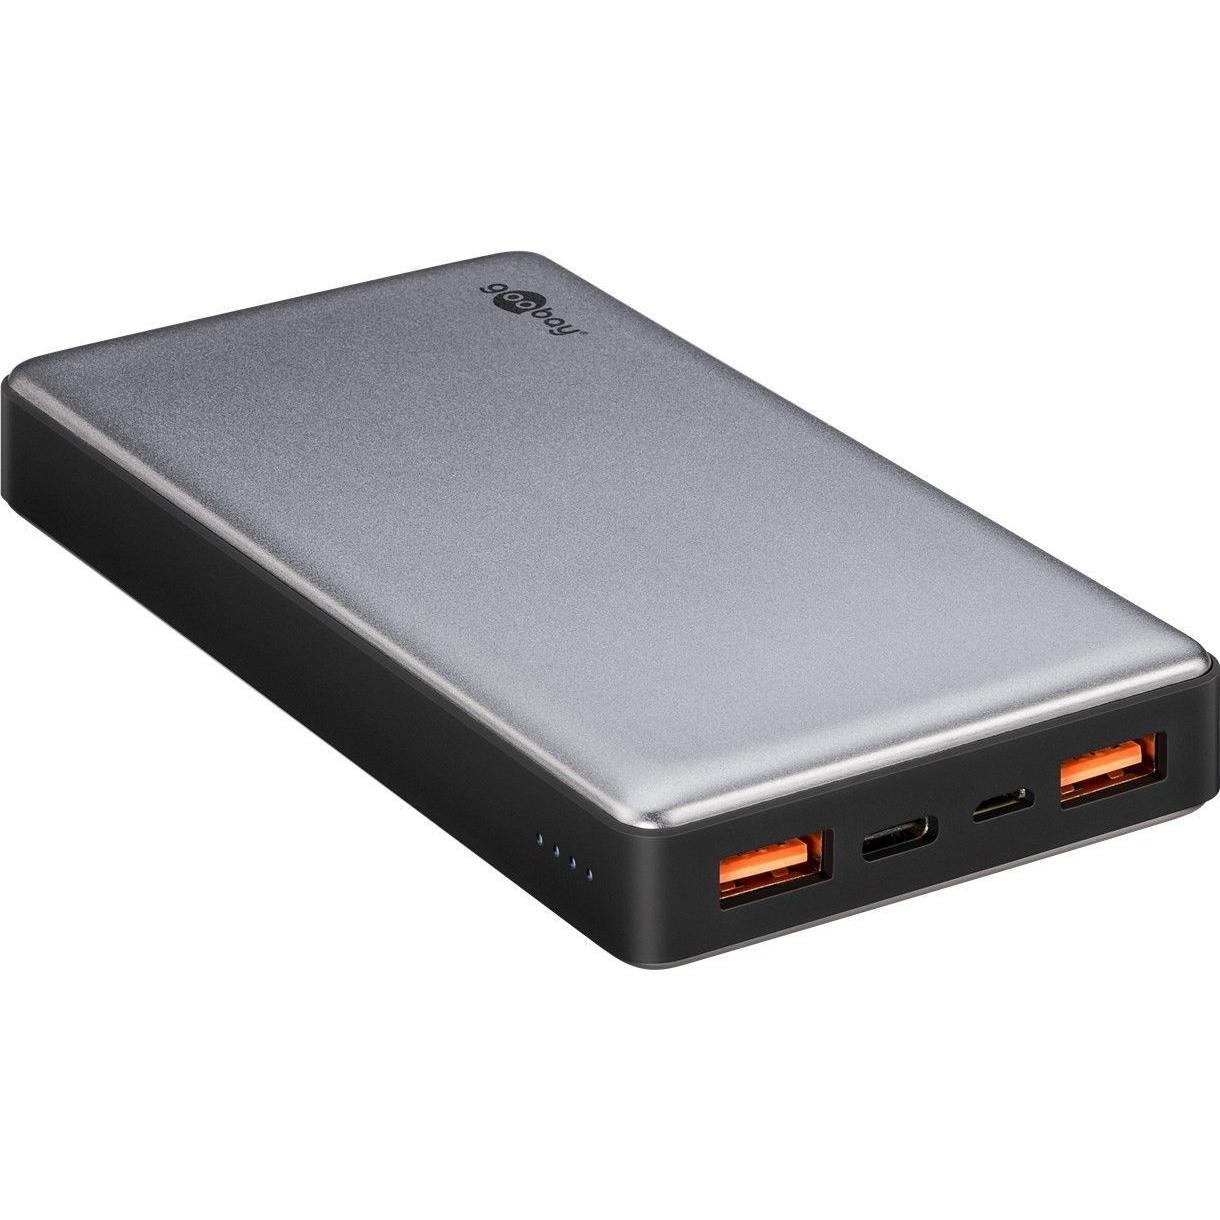 Powerbank Quick Charge 3.0 15.000mAh USB-C